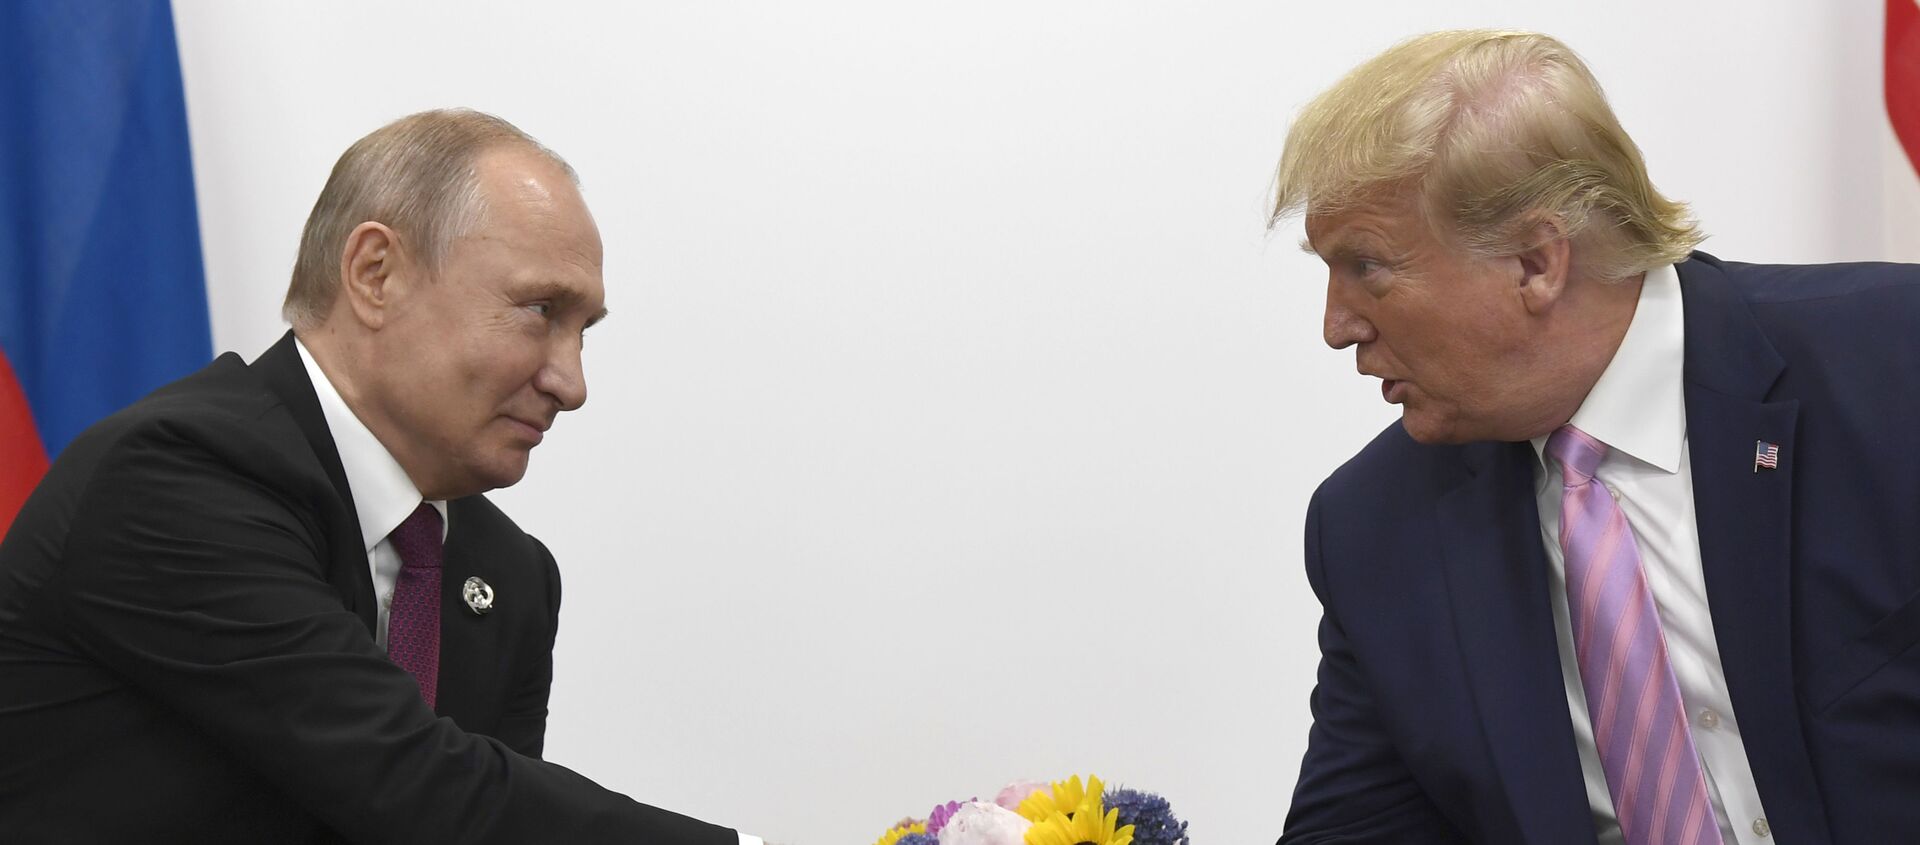 El presidente de Rusia, Vladímir Putin junto a su homólogo de EEUU, Donald Trump - Sputnik Mundo, 1920, 07.02.2020